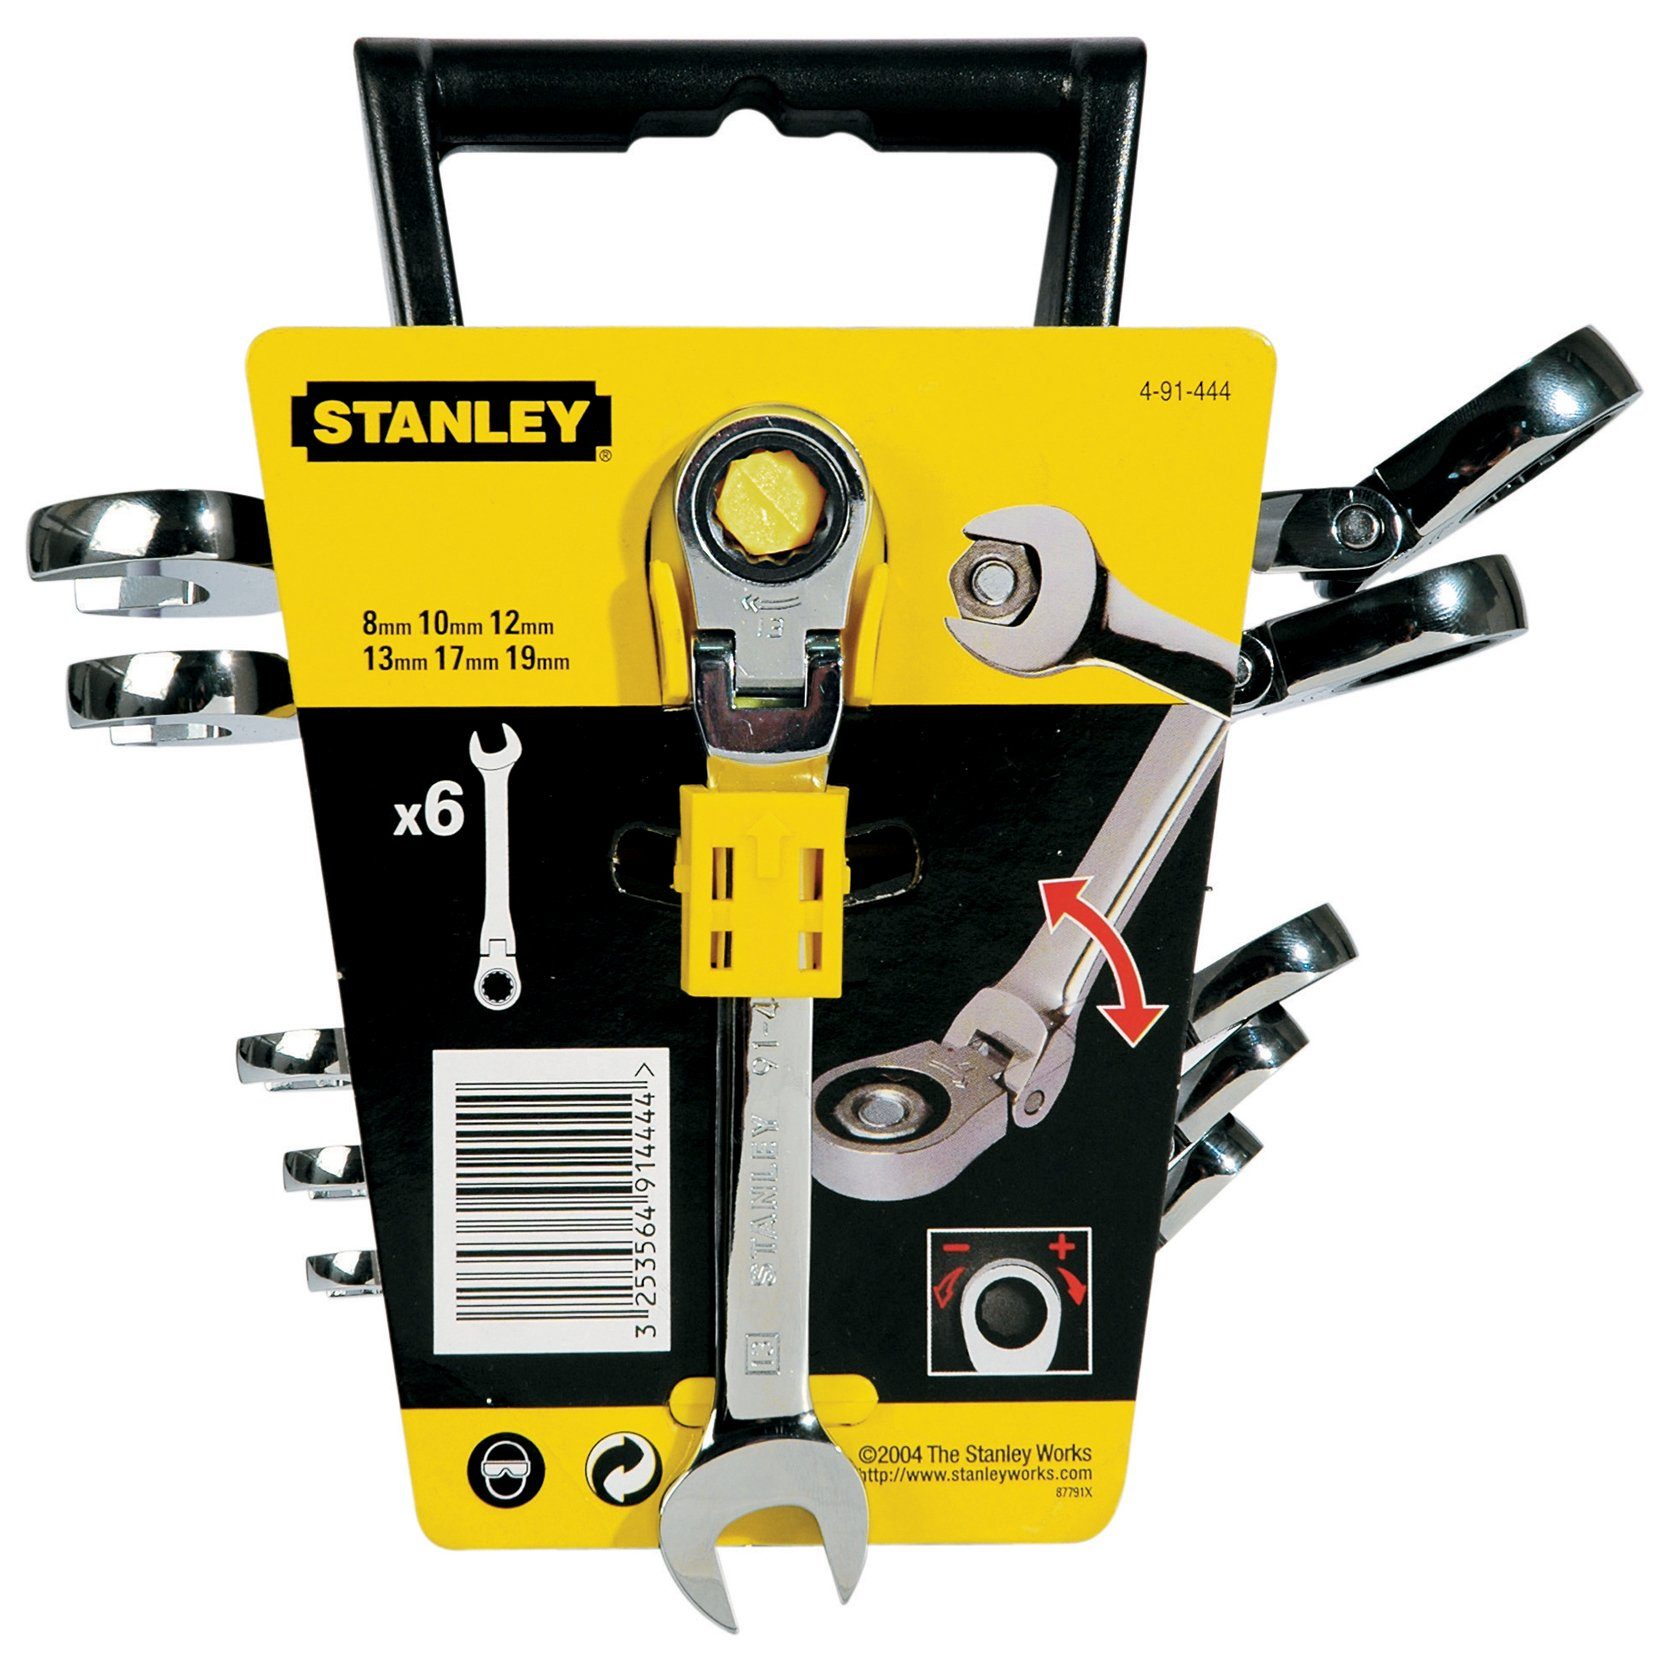 Gabel- Decker 13/ & 17 12/ Stanley by 6-tlg., 19mm, & Maxi-Drive-Plus-Profil Black 4-91-444, 10/ und 8/ Set Ringschlüssel